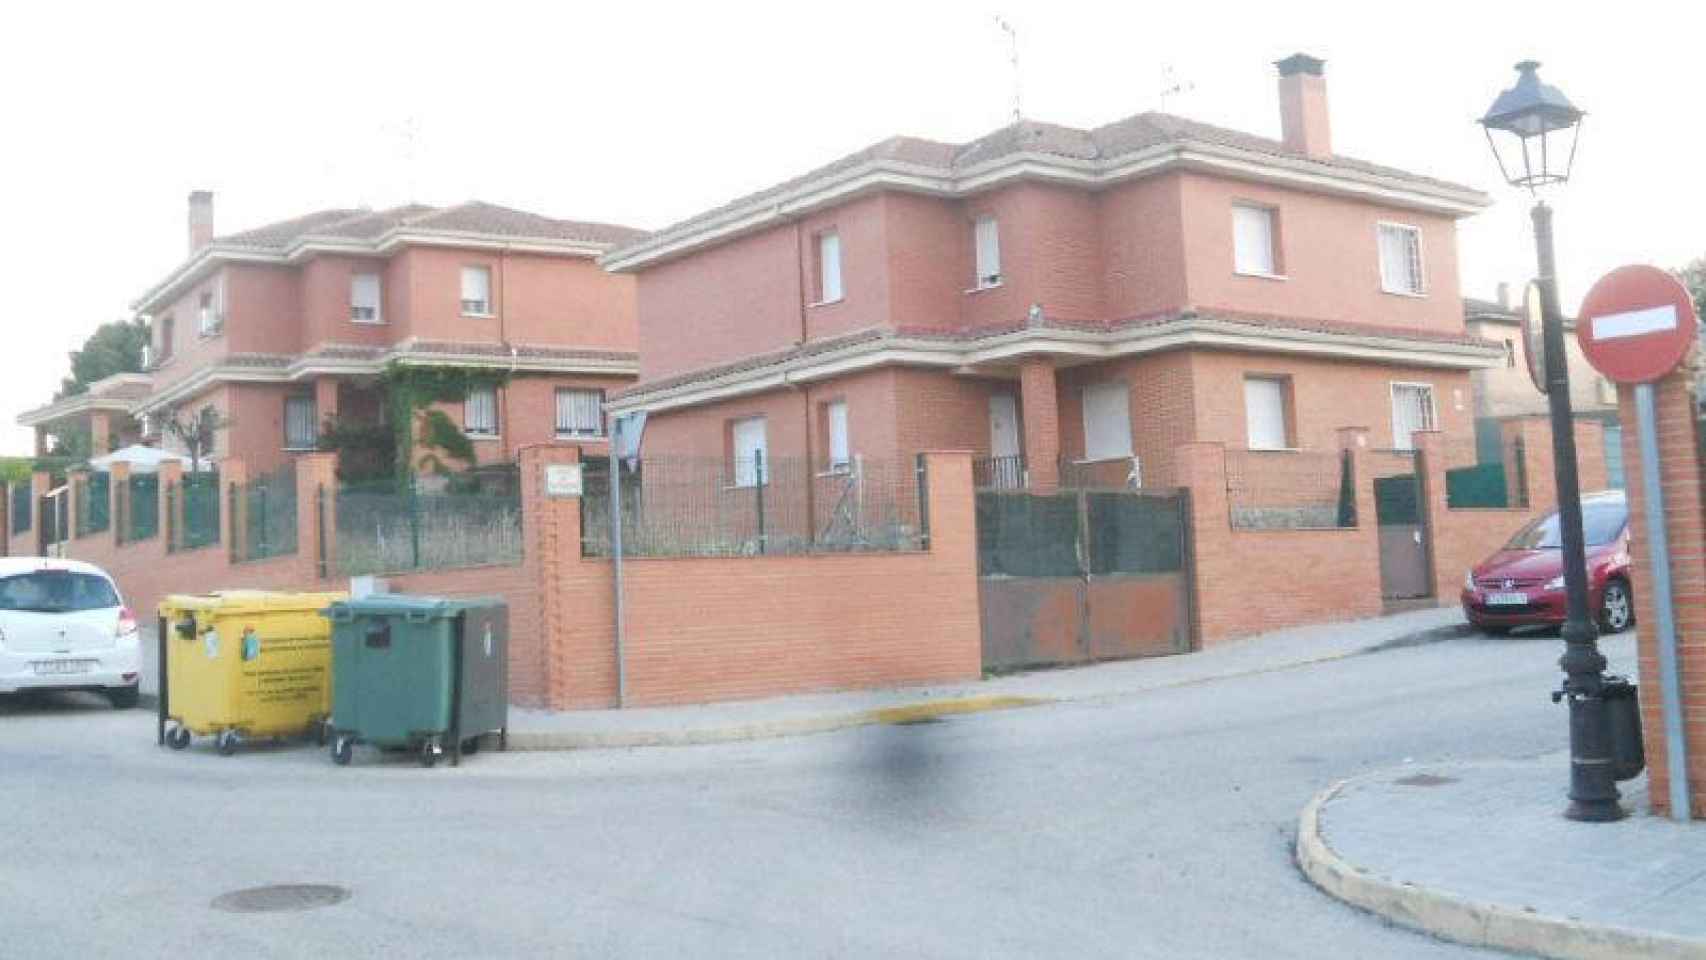 Casa en Valdeavero (Madrid) incluida en la oferta de Servihabitat.